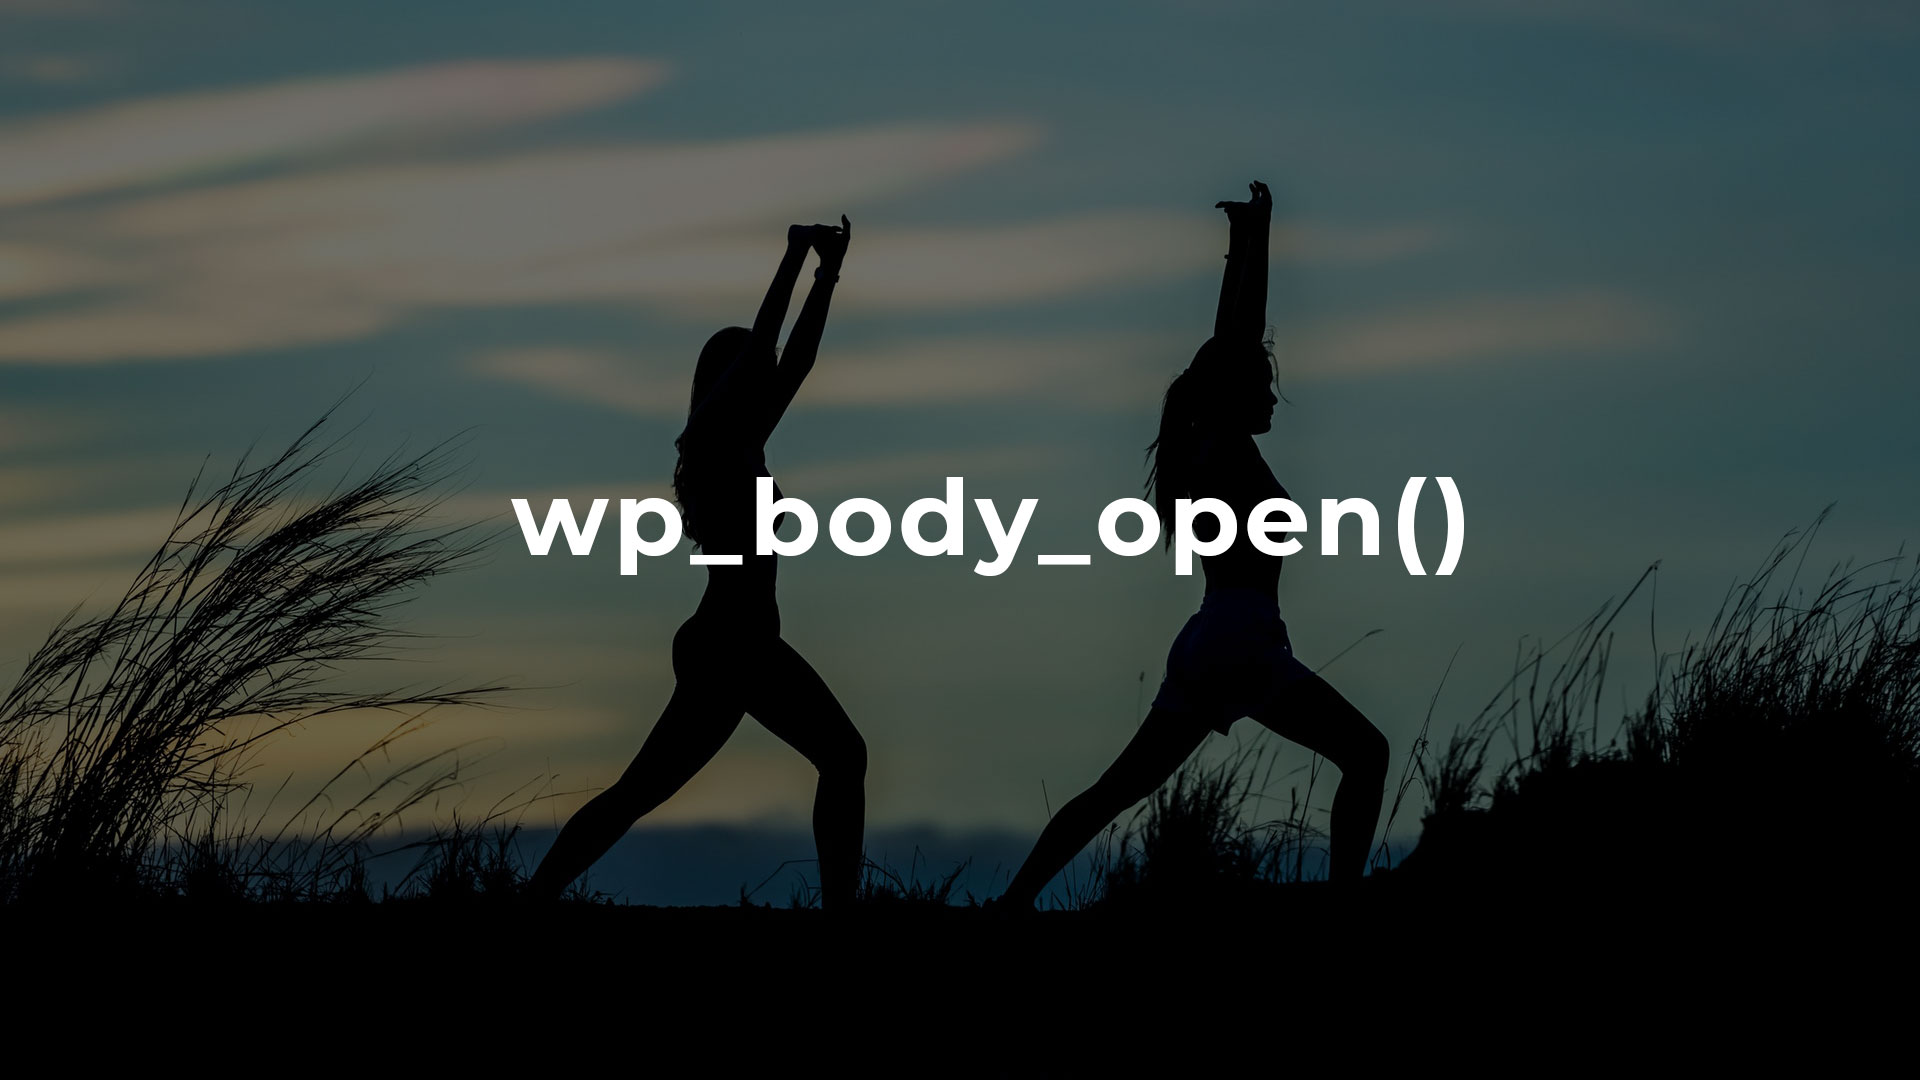 wp_body_open() を使ってbody開始タグのすぐあとにソースコードを簡単に挿入する方法